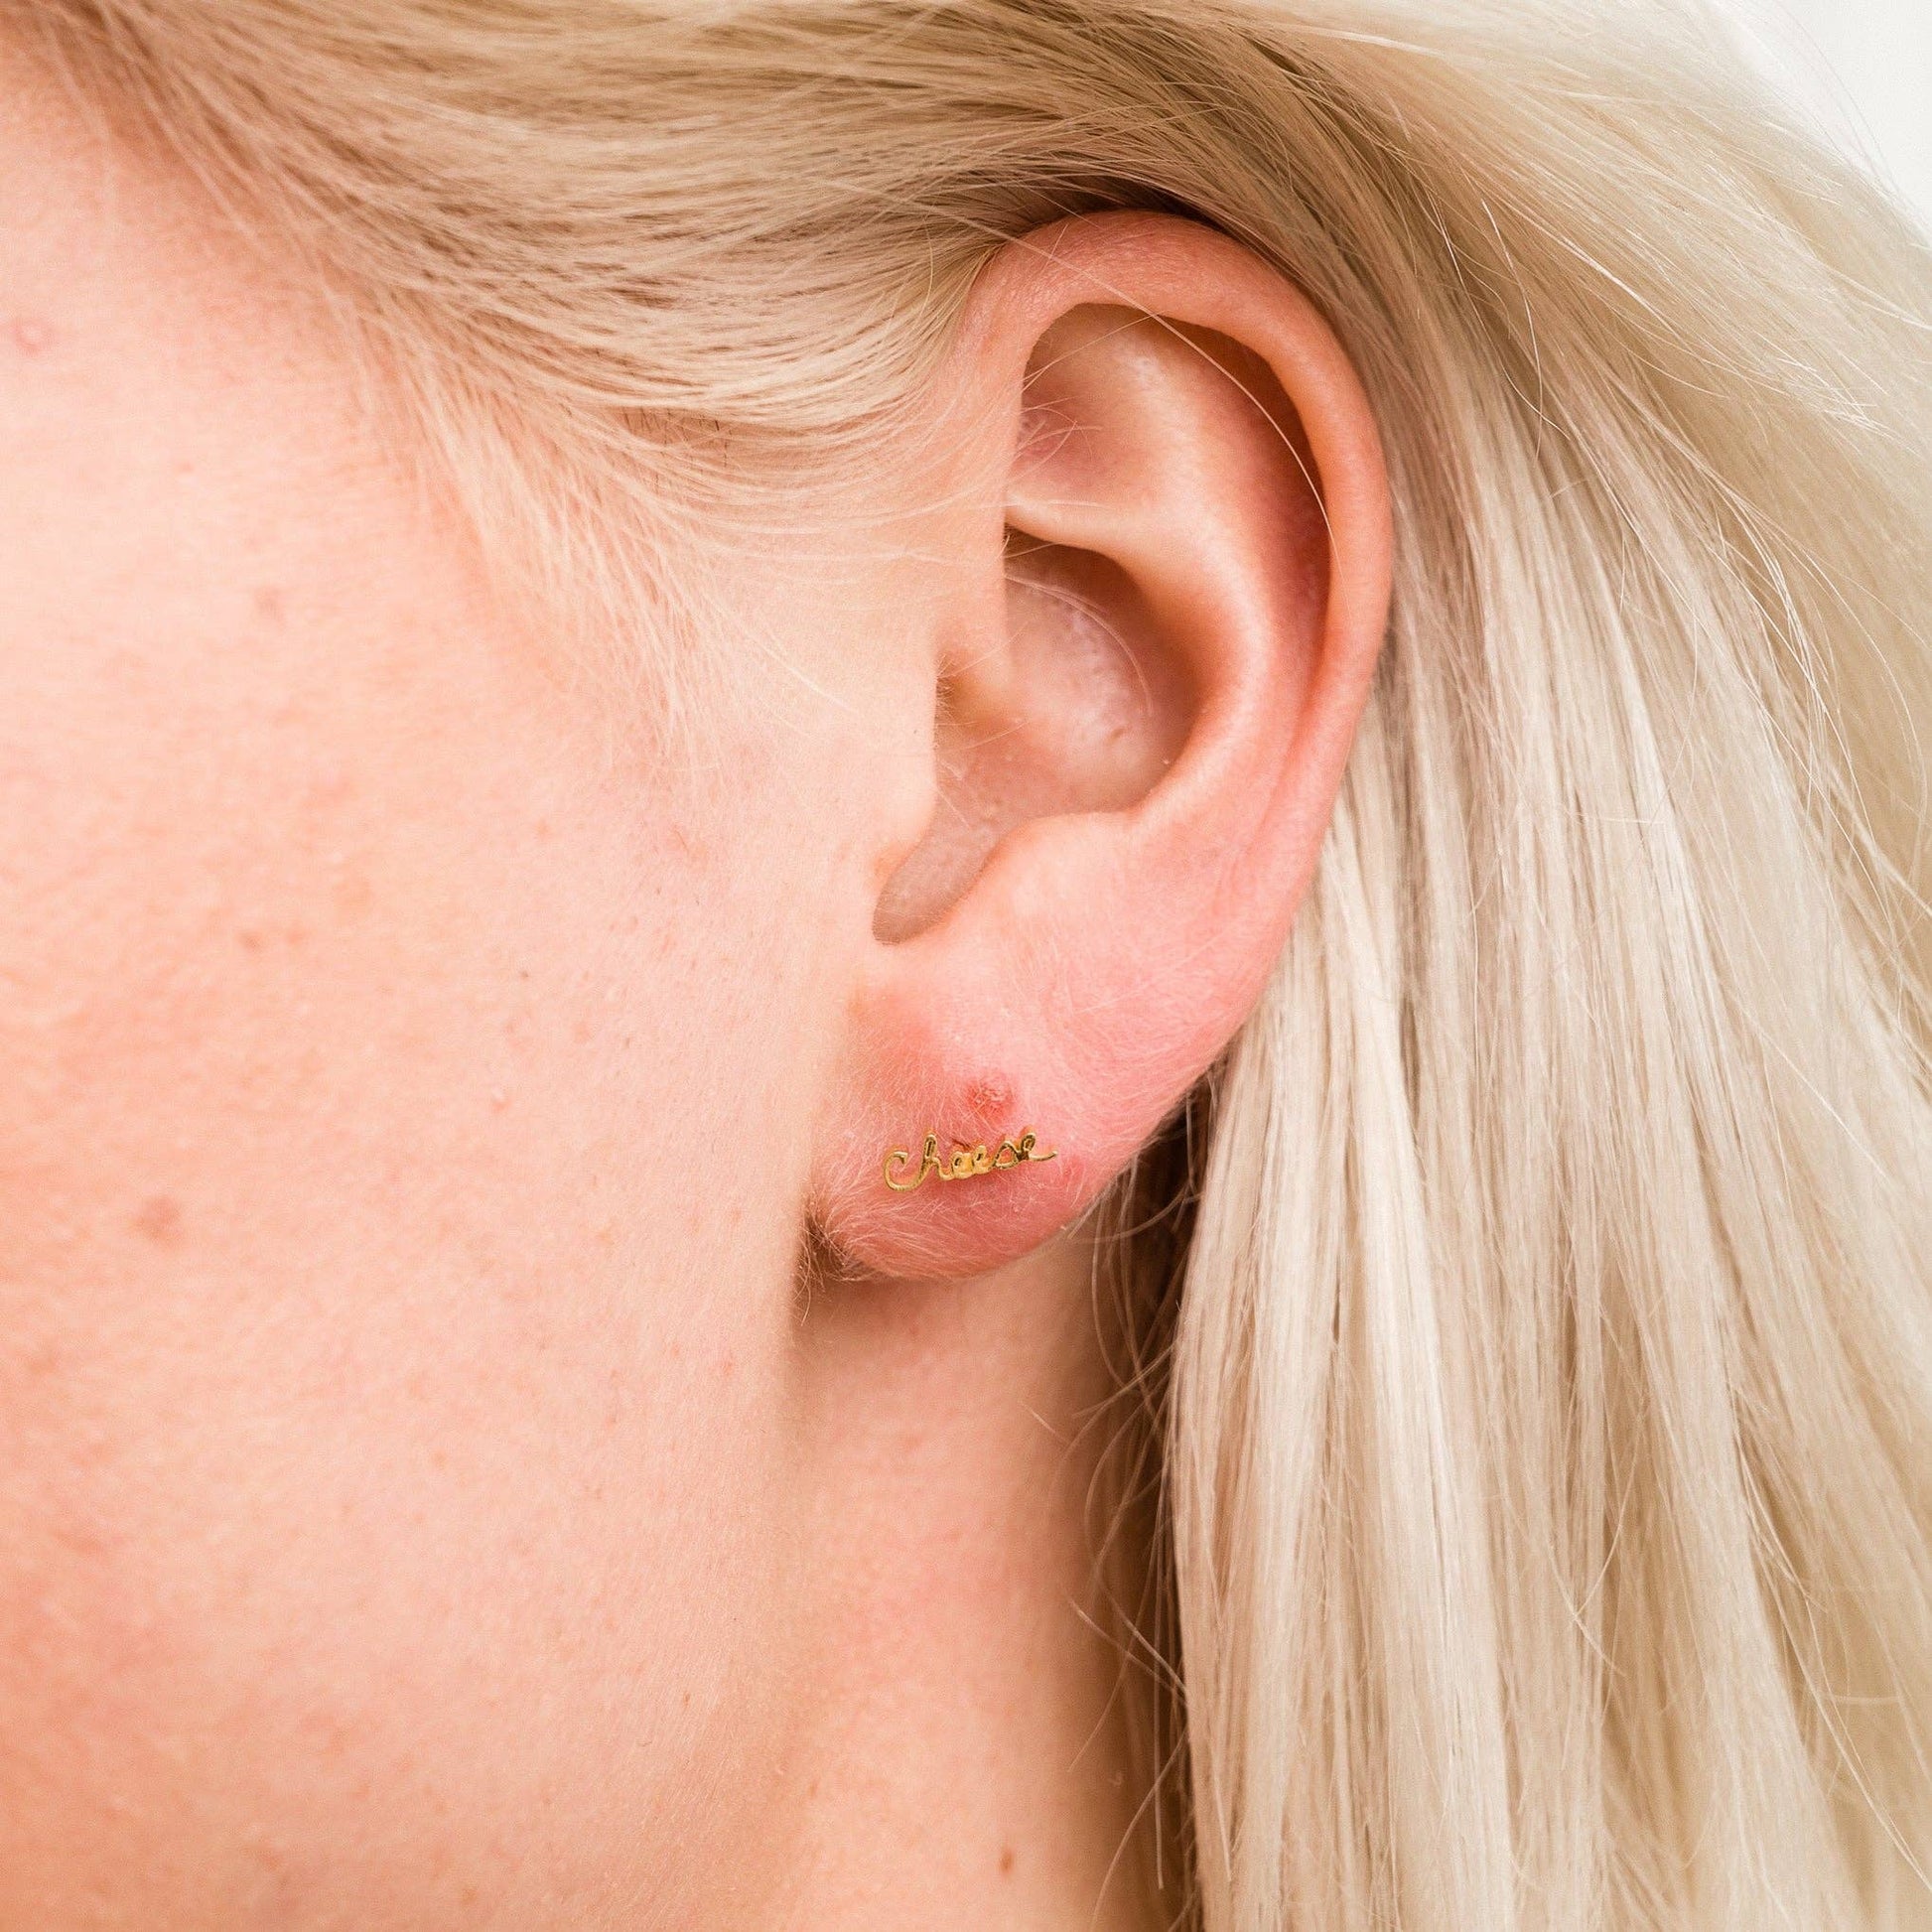 Single 14k gold plated stud earring -- reads "cheese" in handwritten script. Worn on ear for scale 